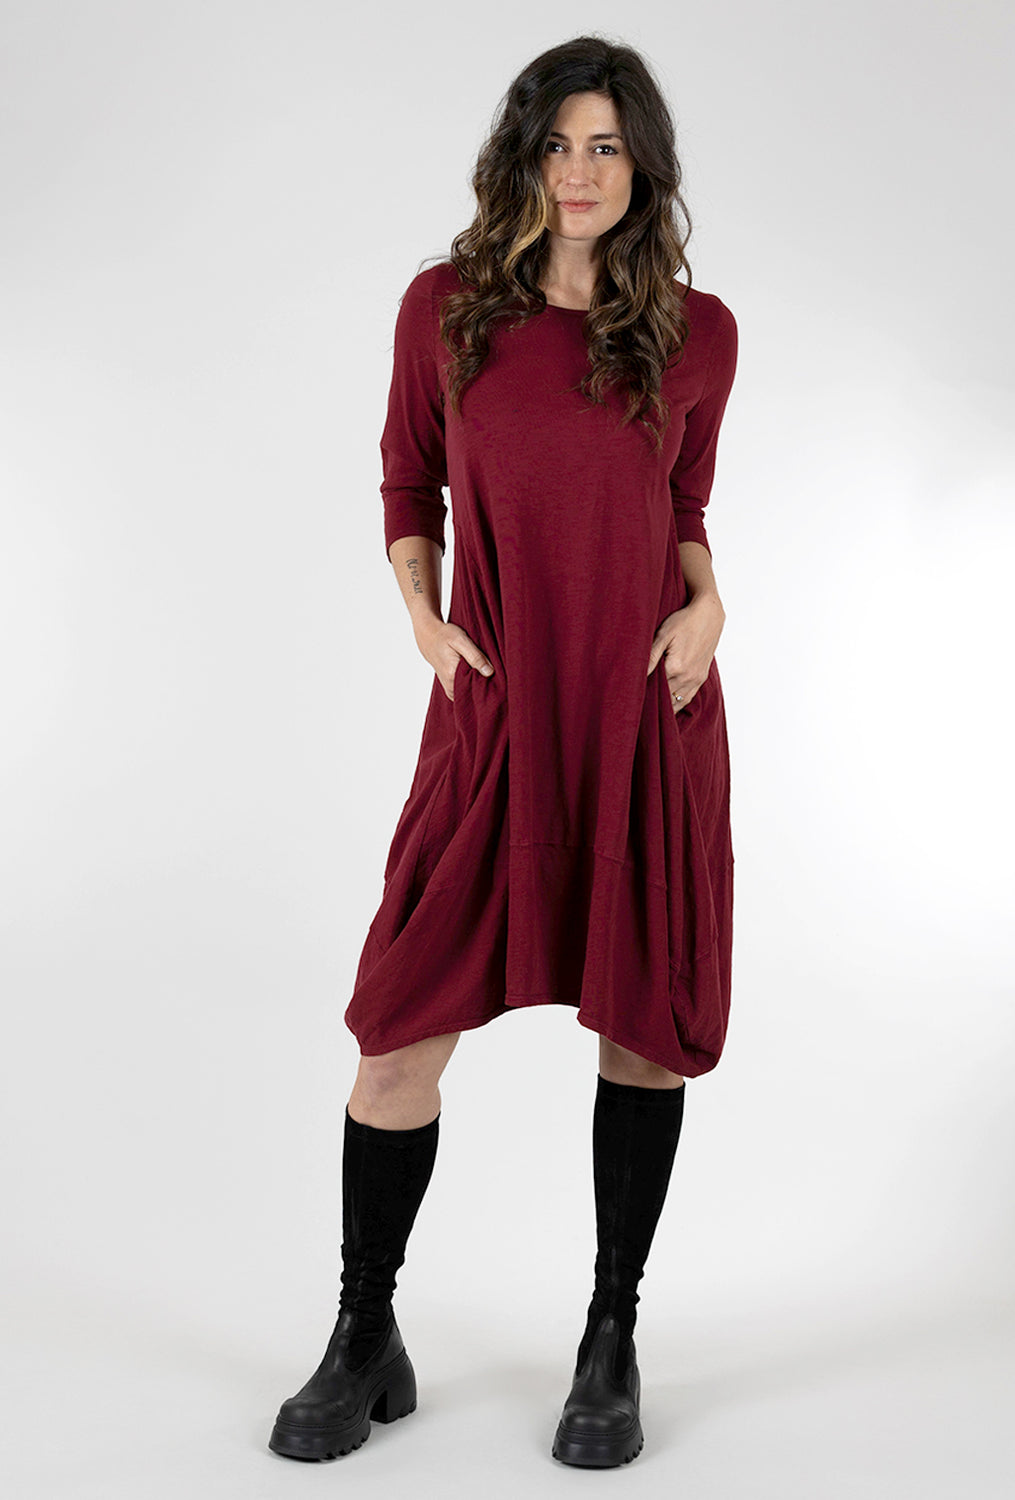 3/4-Sleeve Tulip Dress, Sumac Red